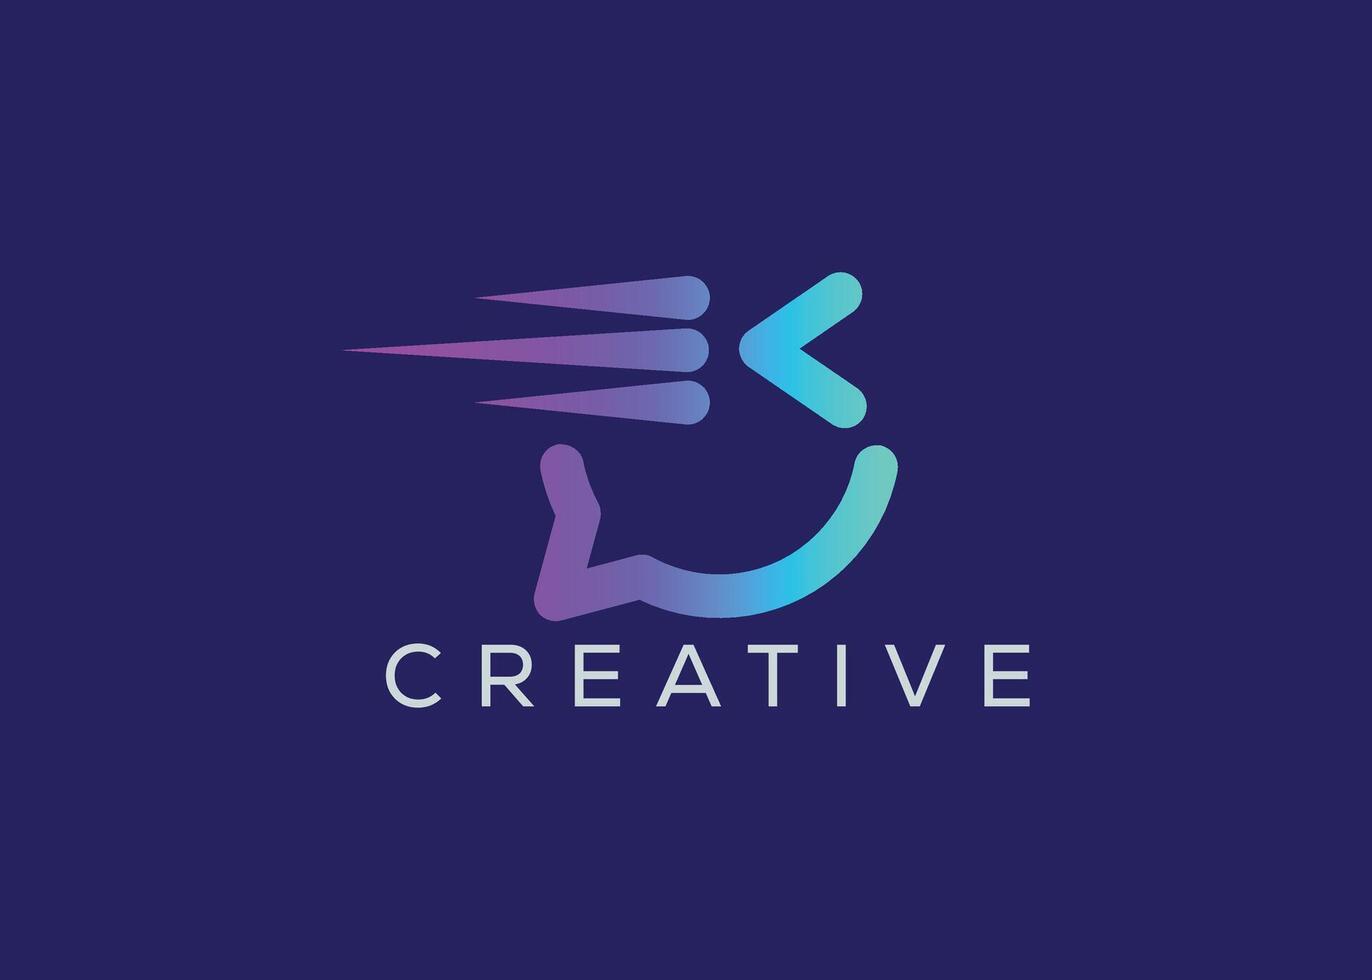 Minimalist blink chat logo design vector template. Creative modern chat logo